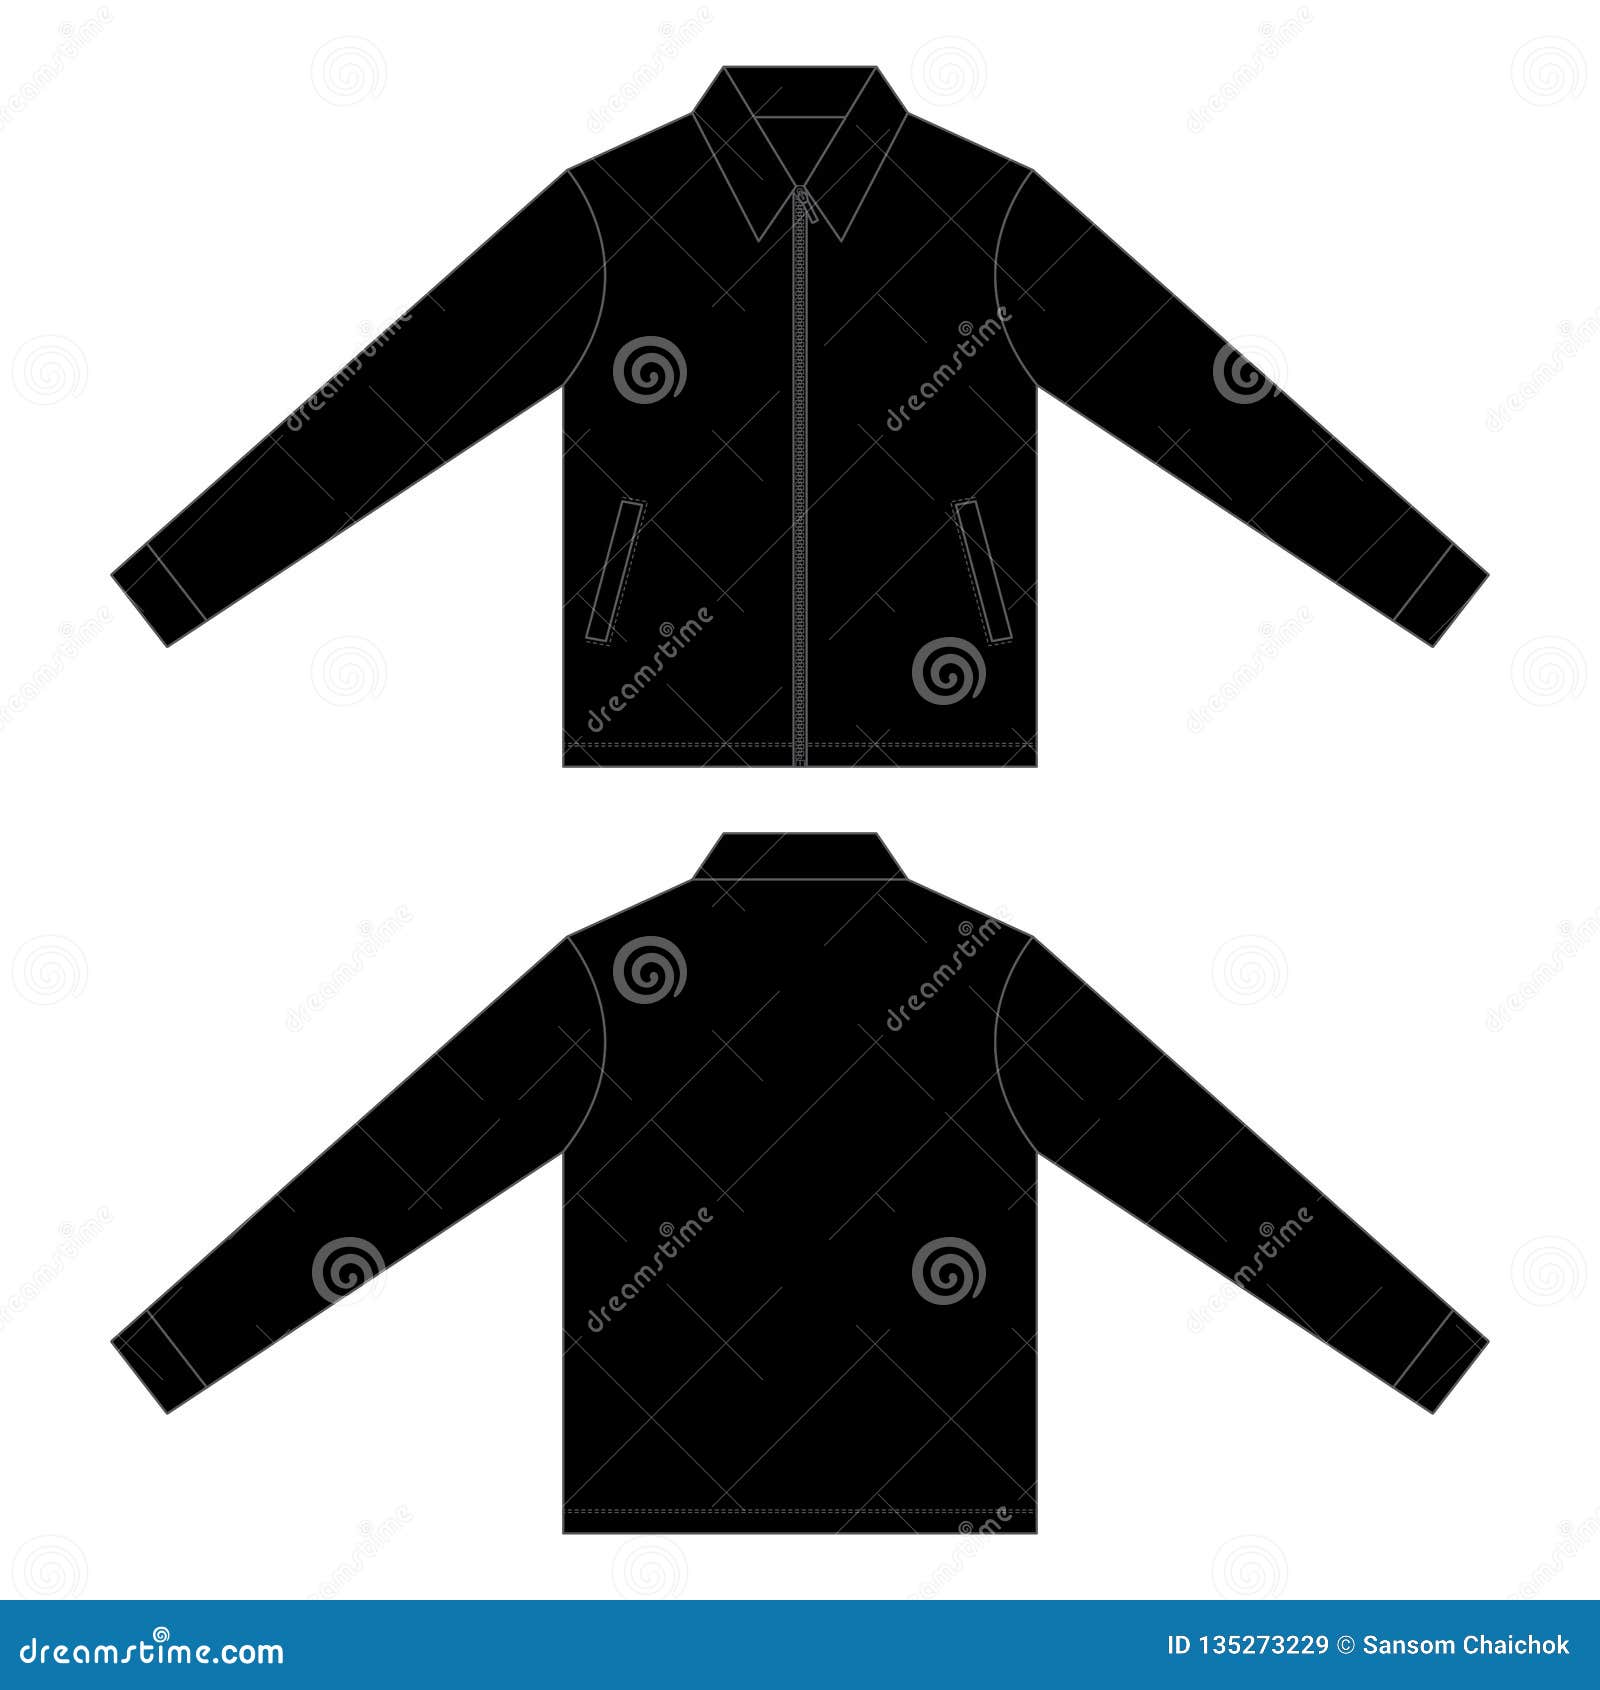  Black  Jacket  Vector For Template  Stock Illustration 